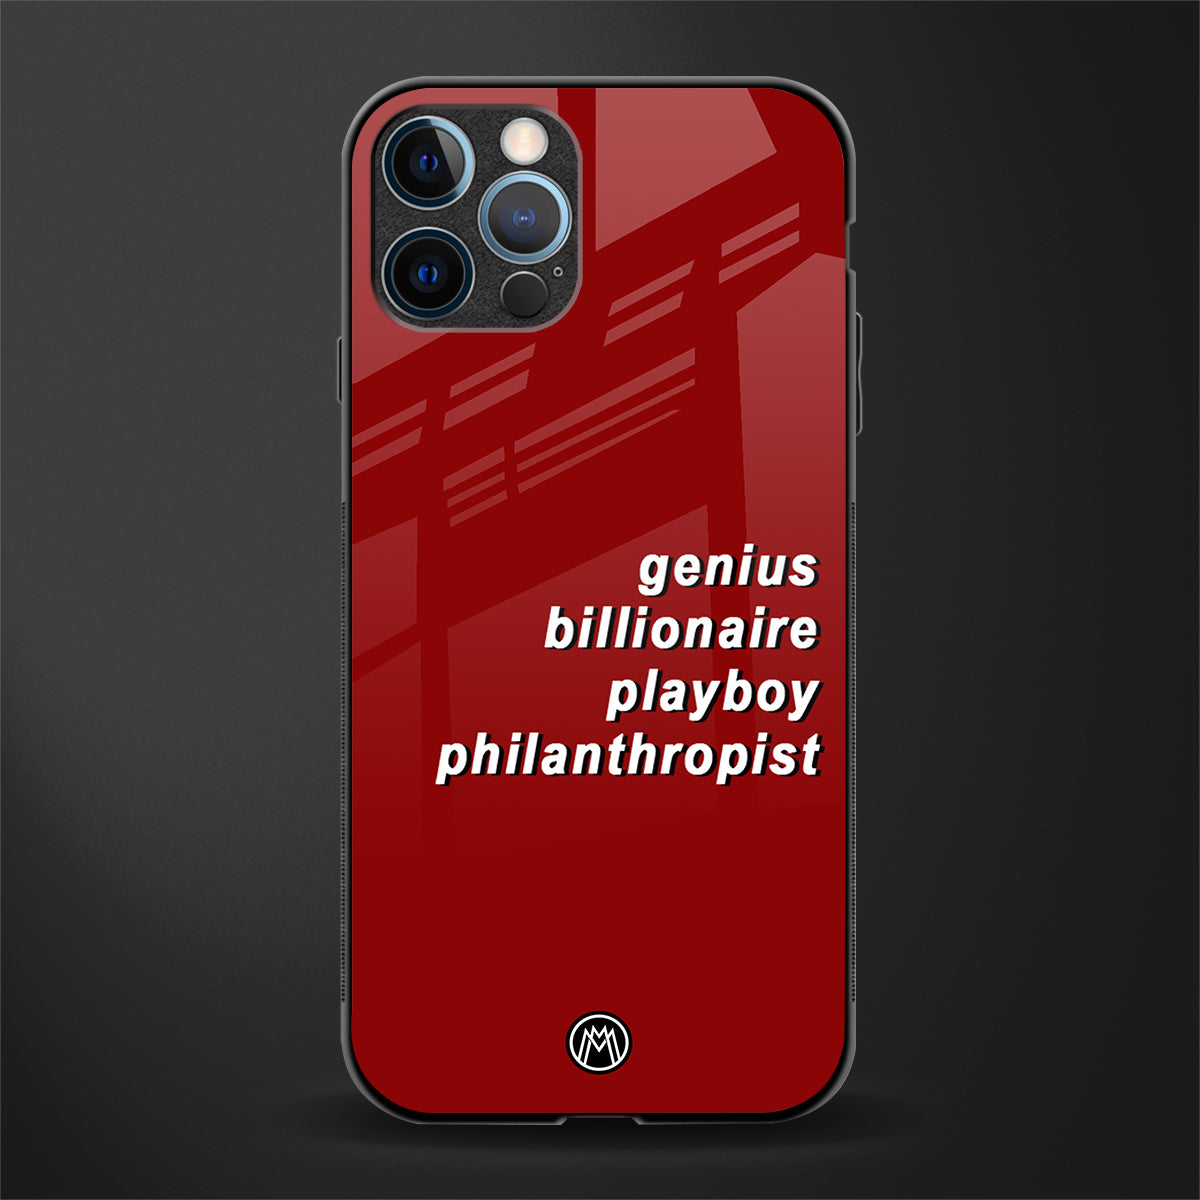 genius billionaire playboy philantrophist glass case for iphone 12 pro max image